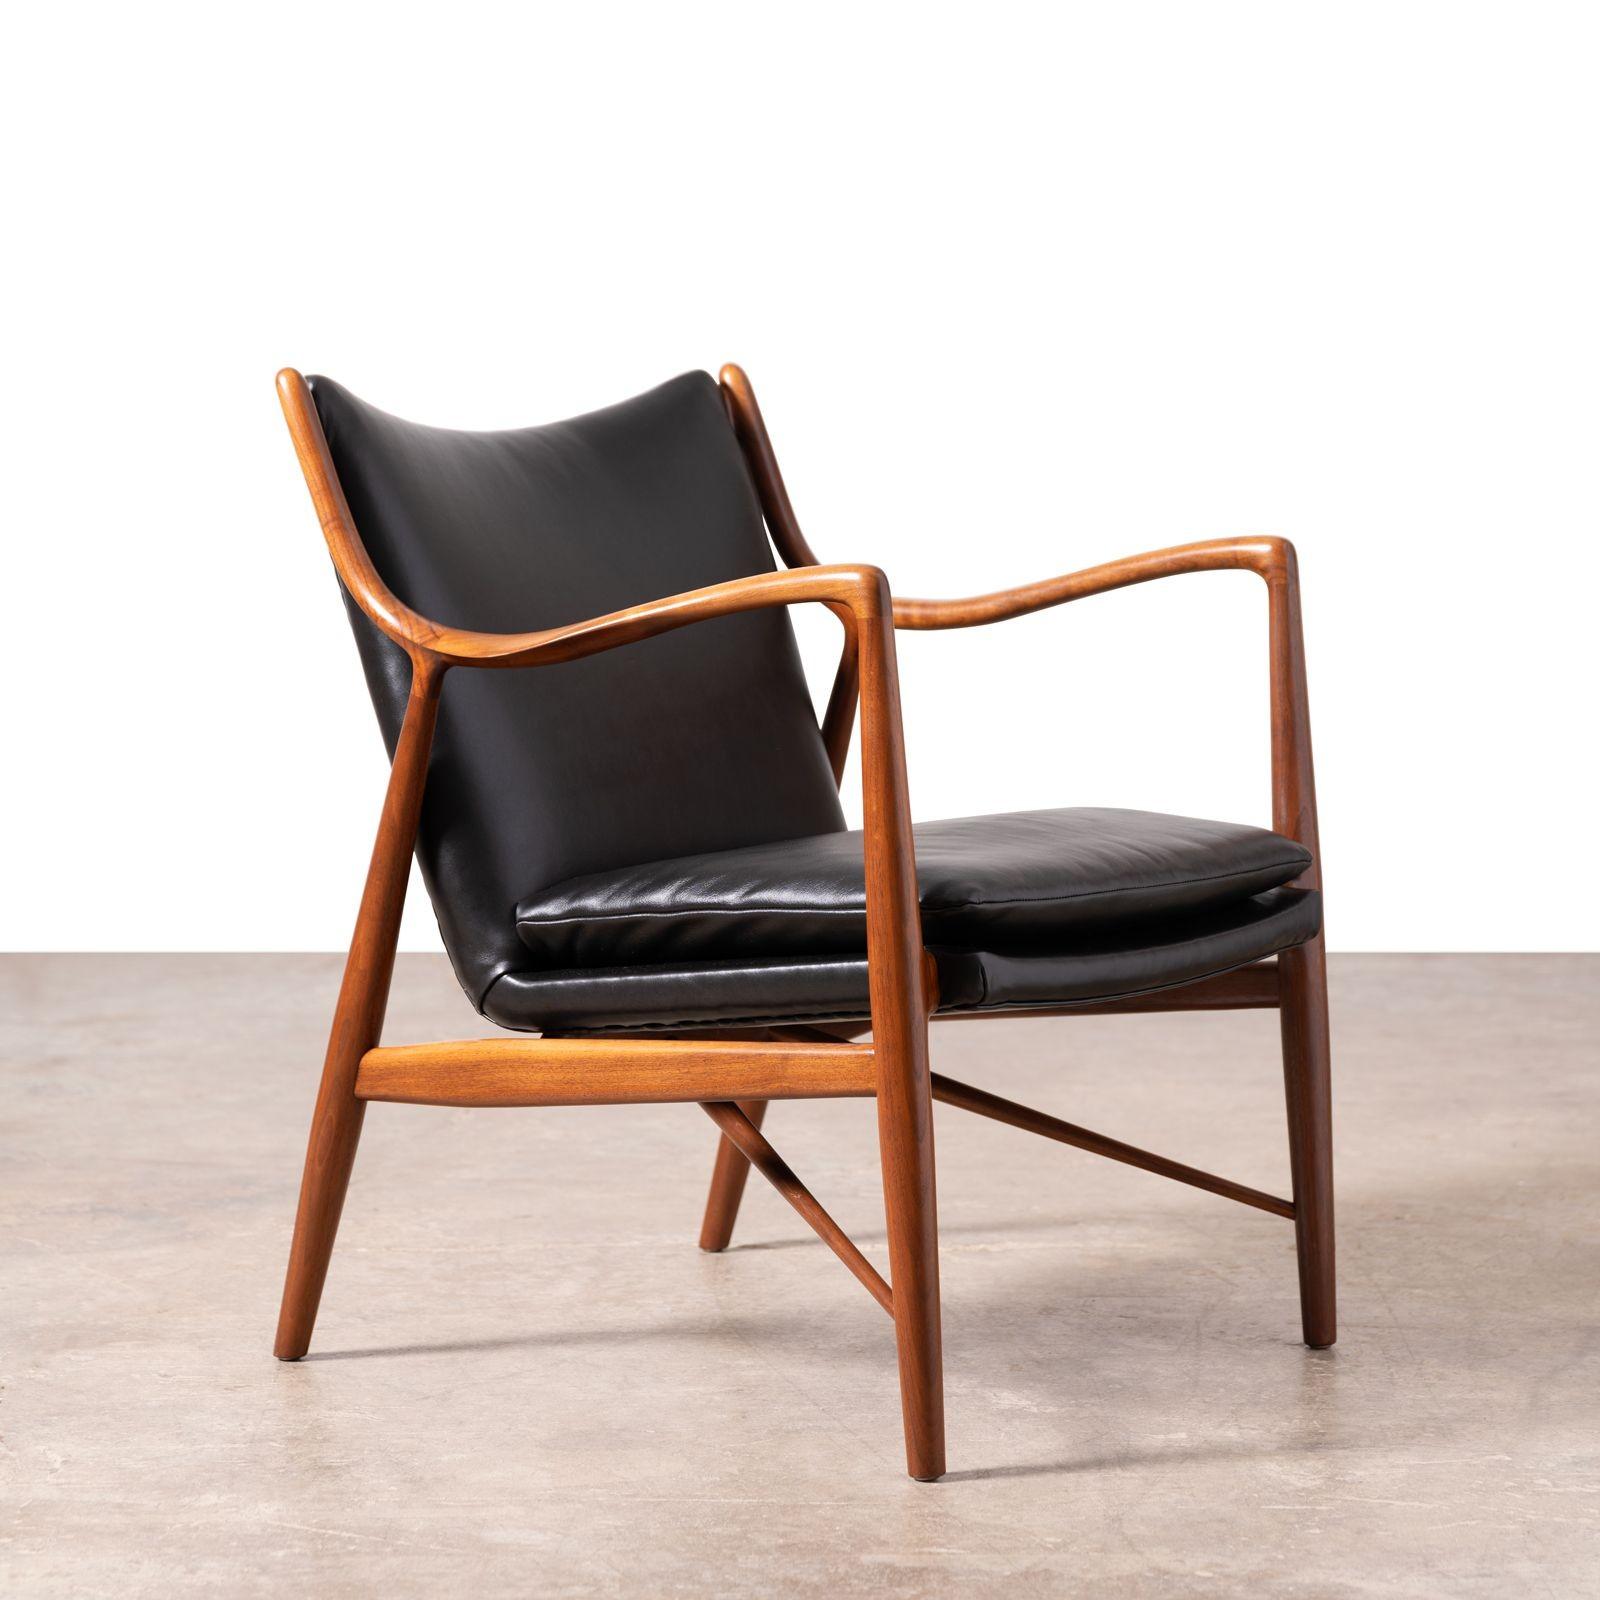 American Finn Juhl NV-45 Scandinavian Lounge Chairs in Walnut and Black Leather 1950s For Sale